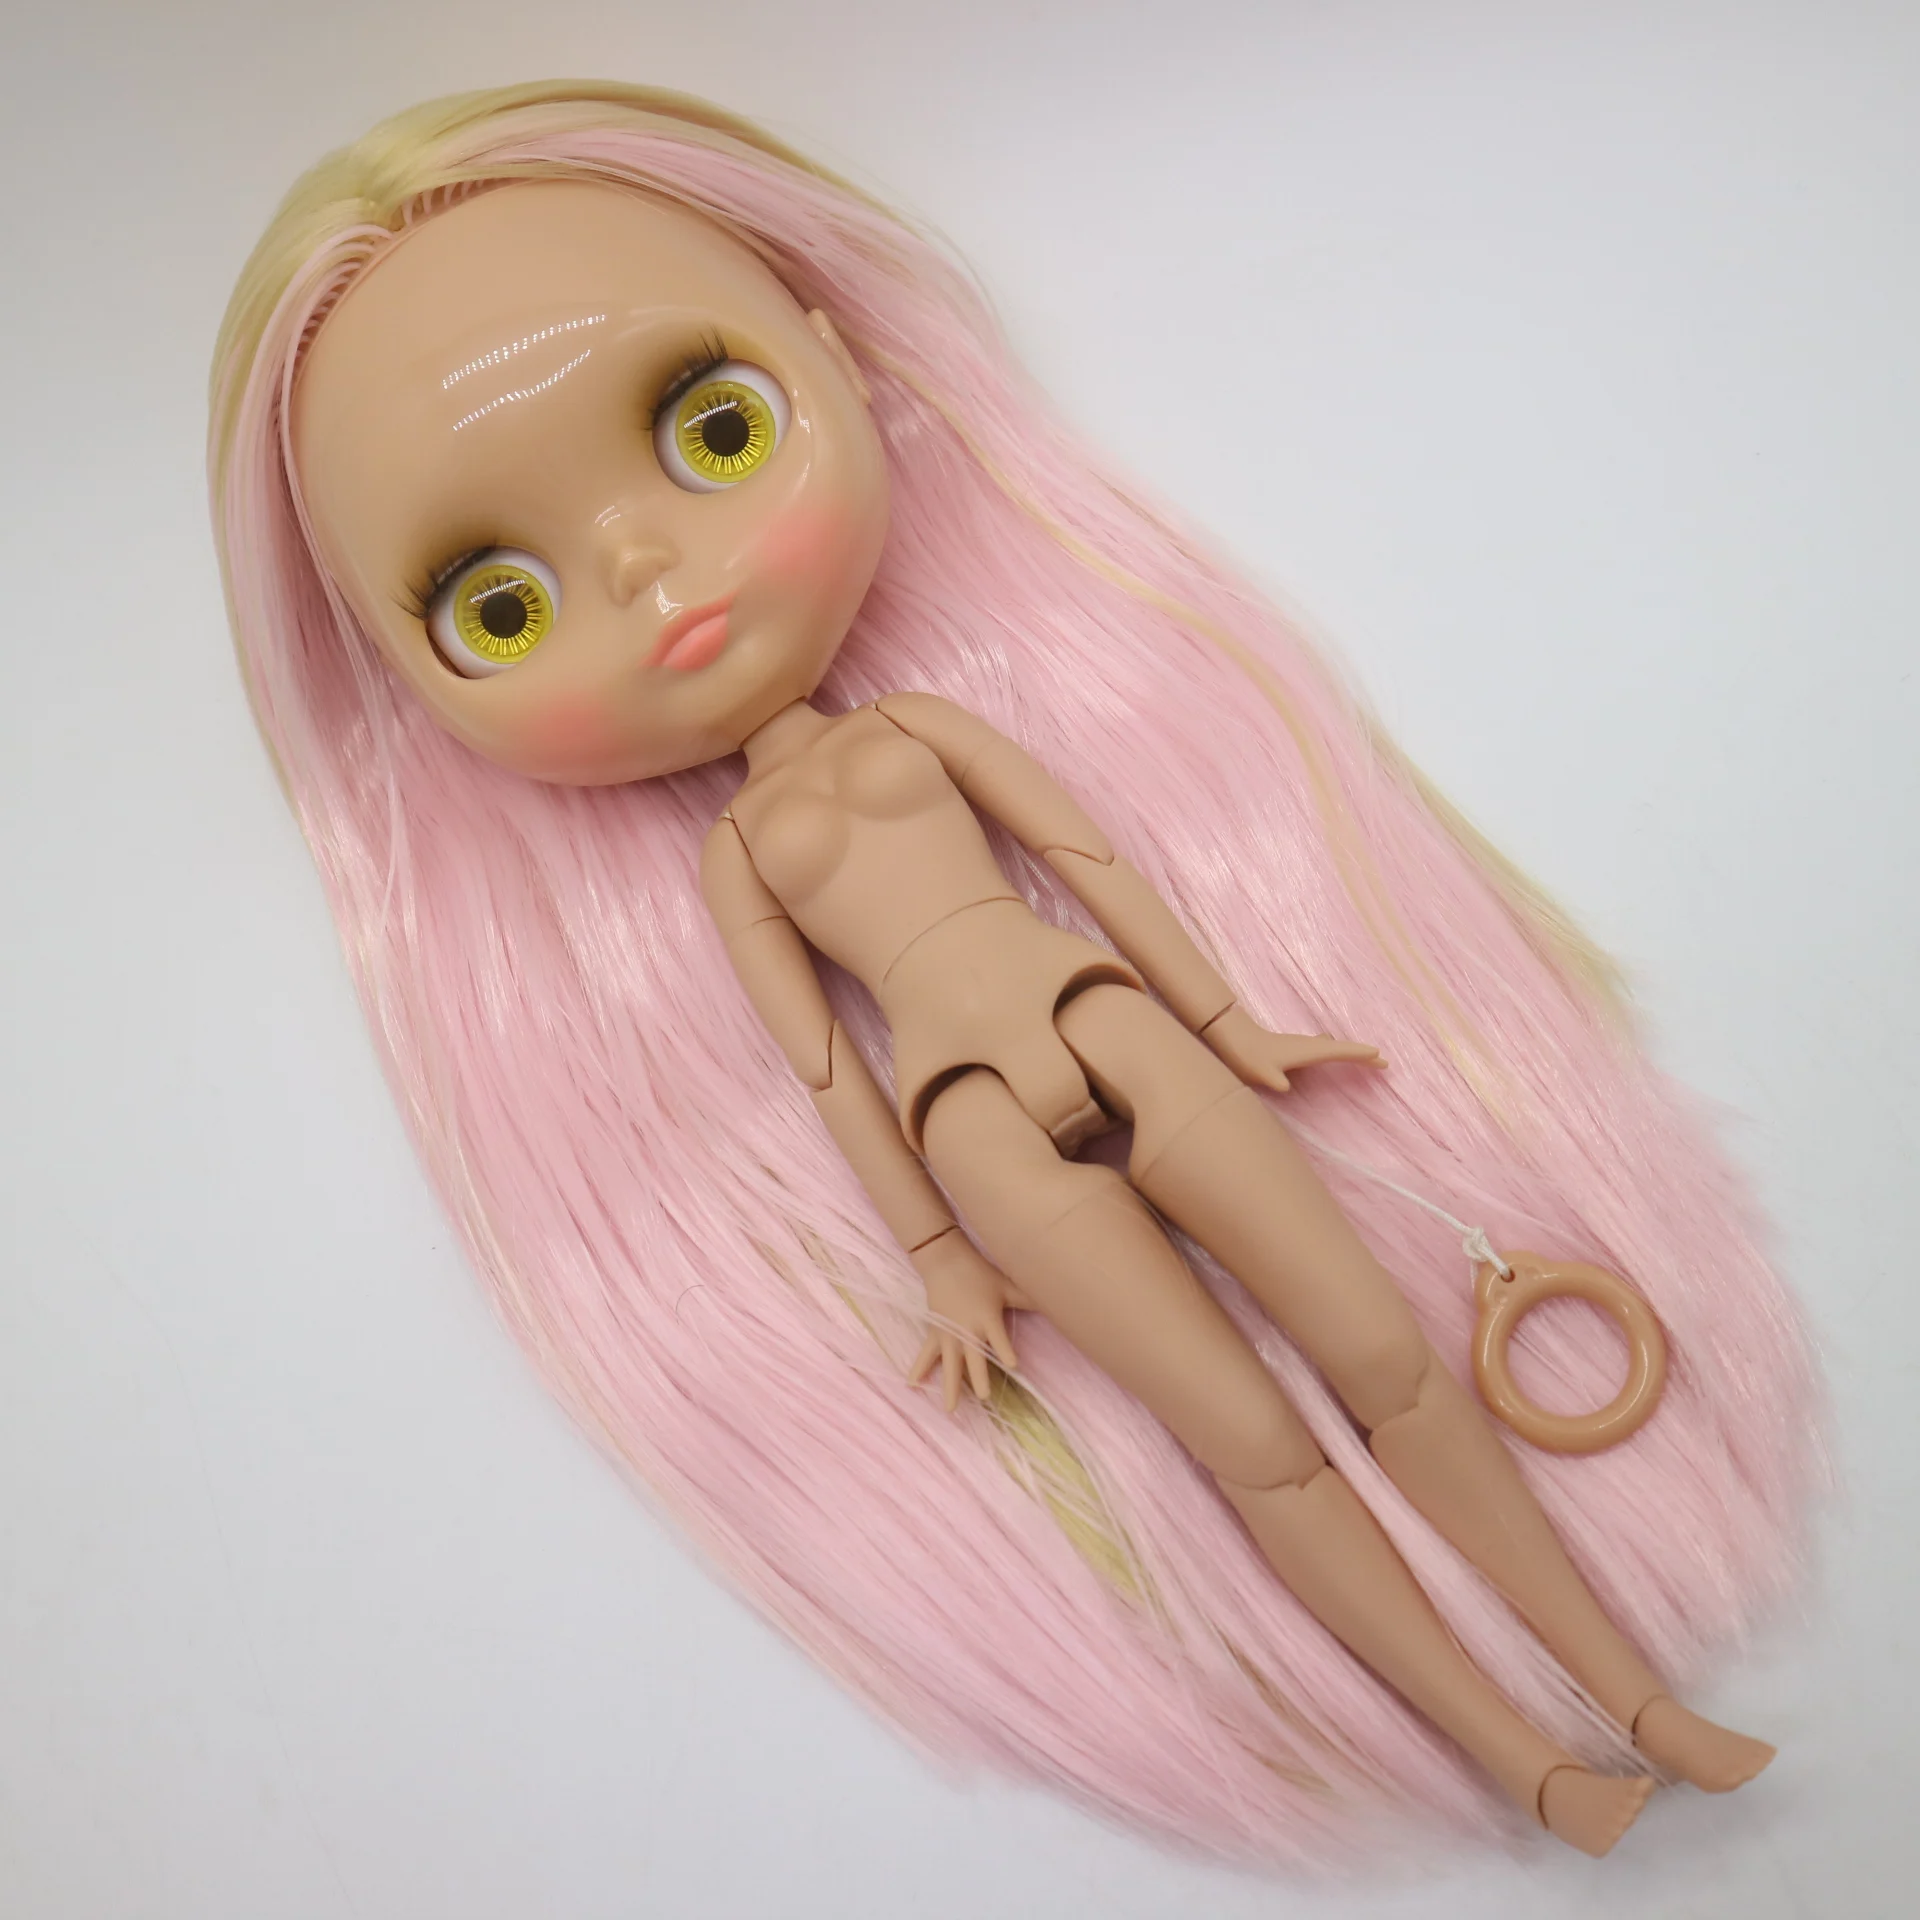 Обнаженная кукла Blyth суставы тела смешанные волосы без взрыва загара кожи